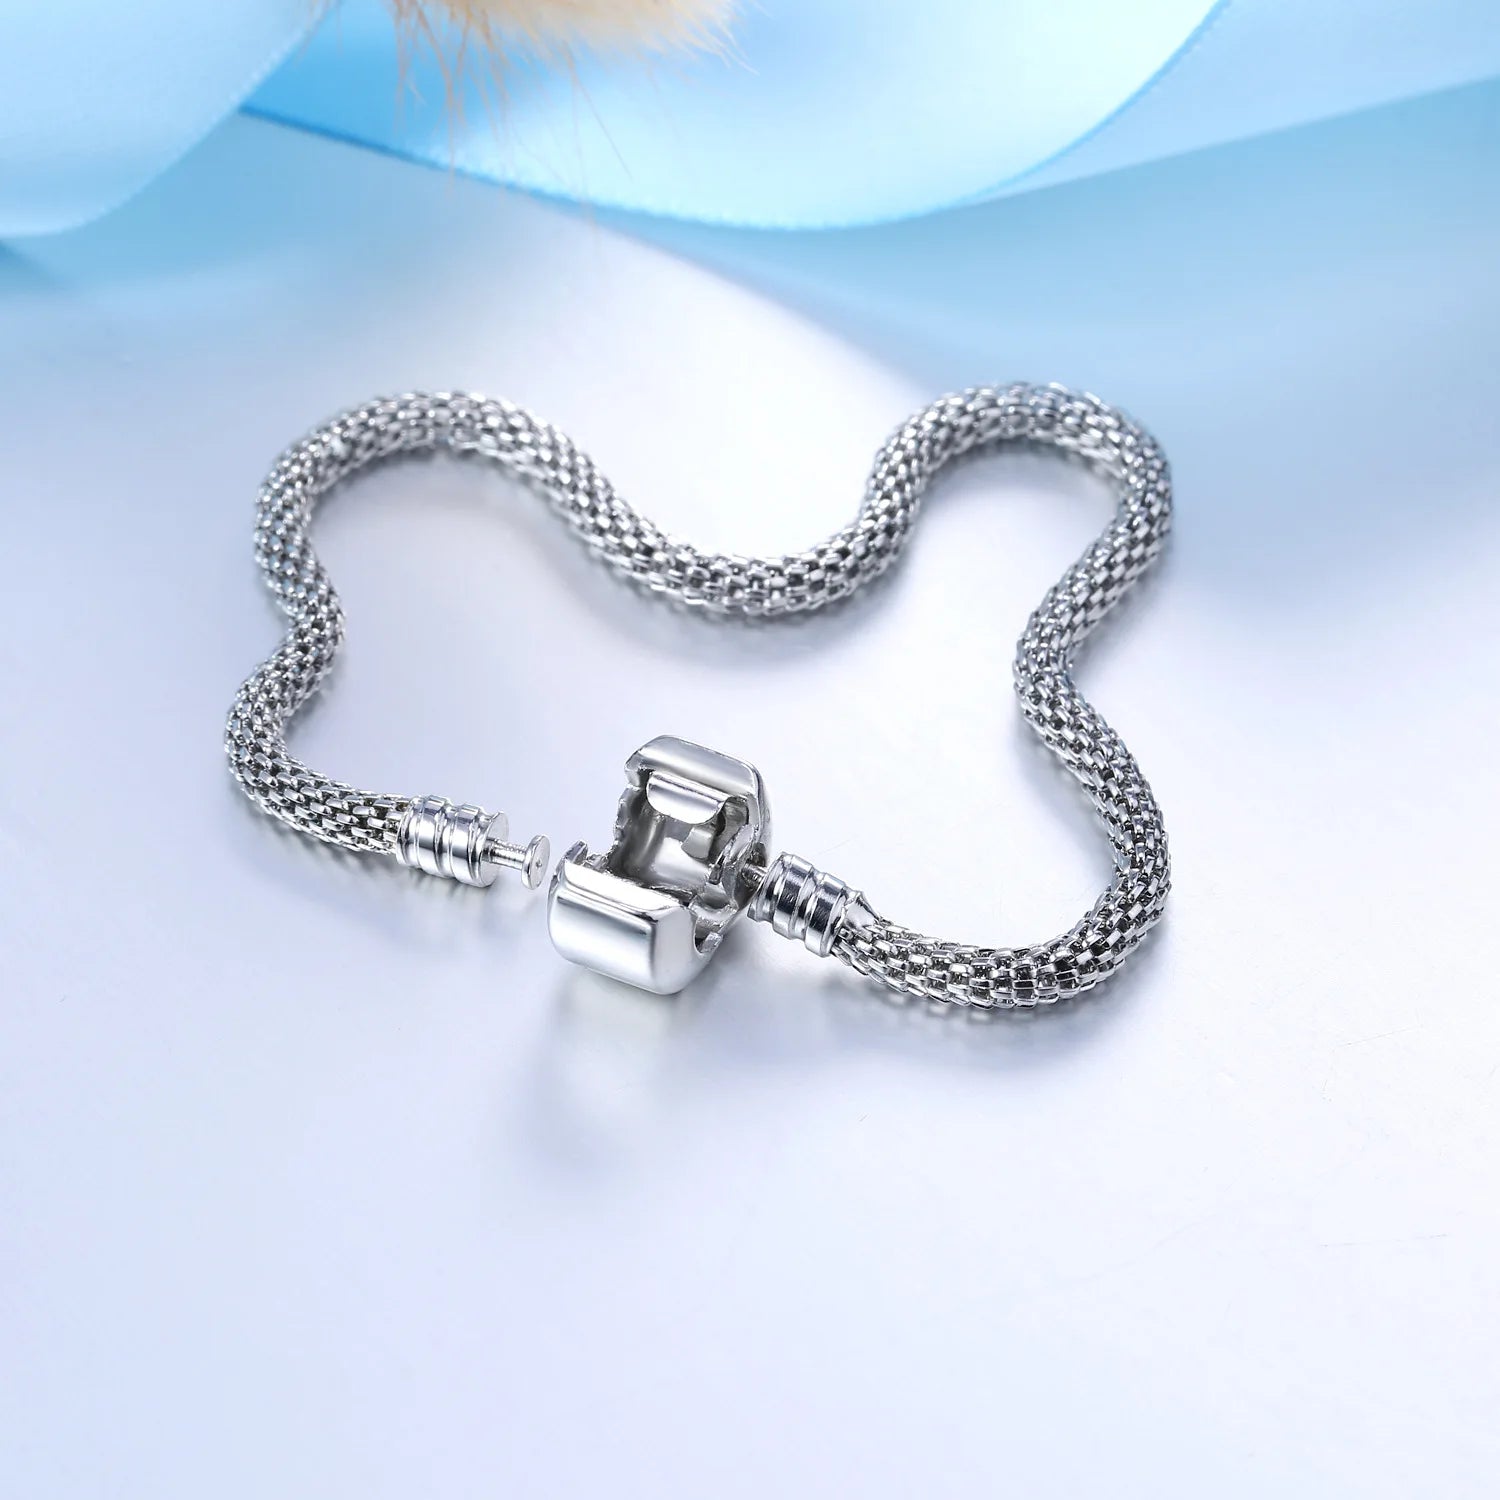 New European High Quality Original Snake Chain Classic Pandora Bracelet Bangle Trendy Jewelry for Women Girls DIY Jewelry Gift